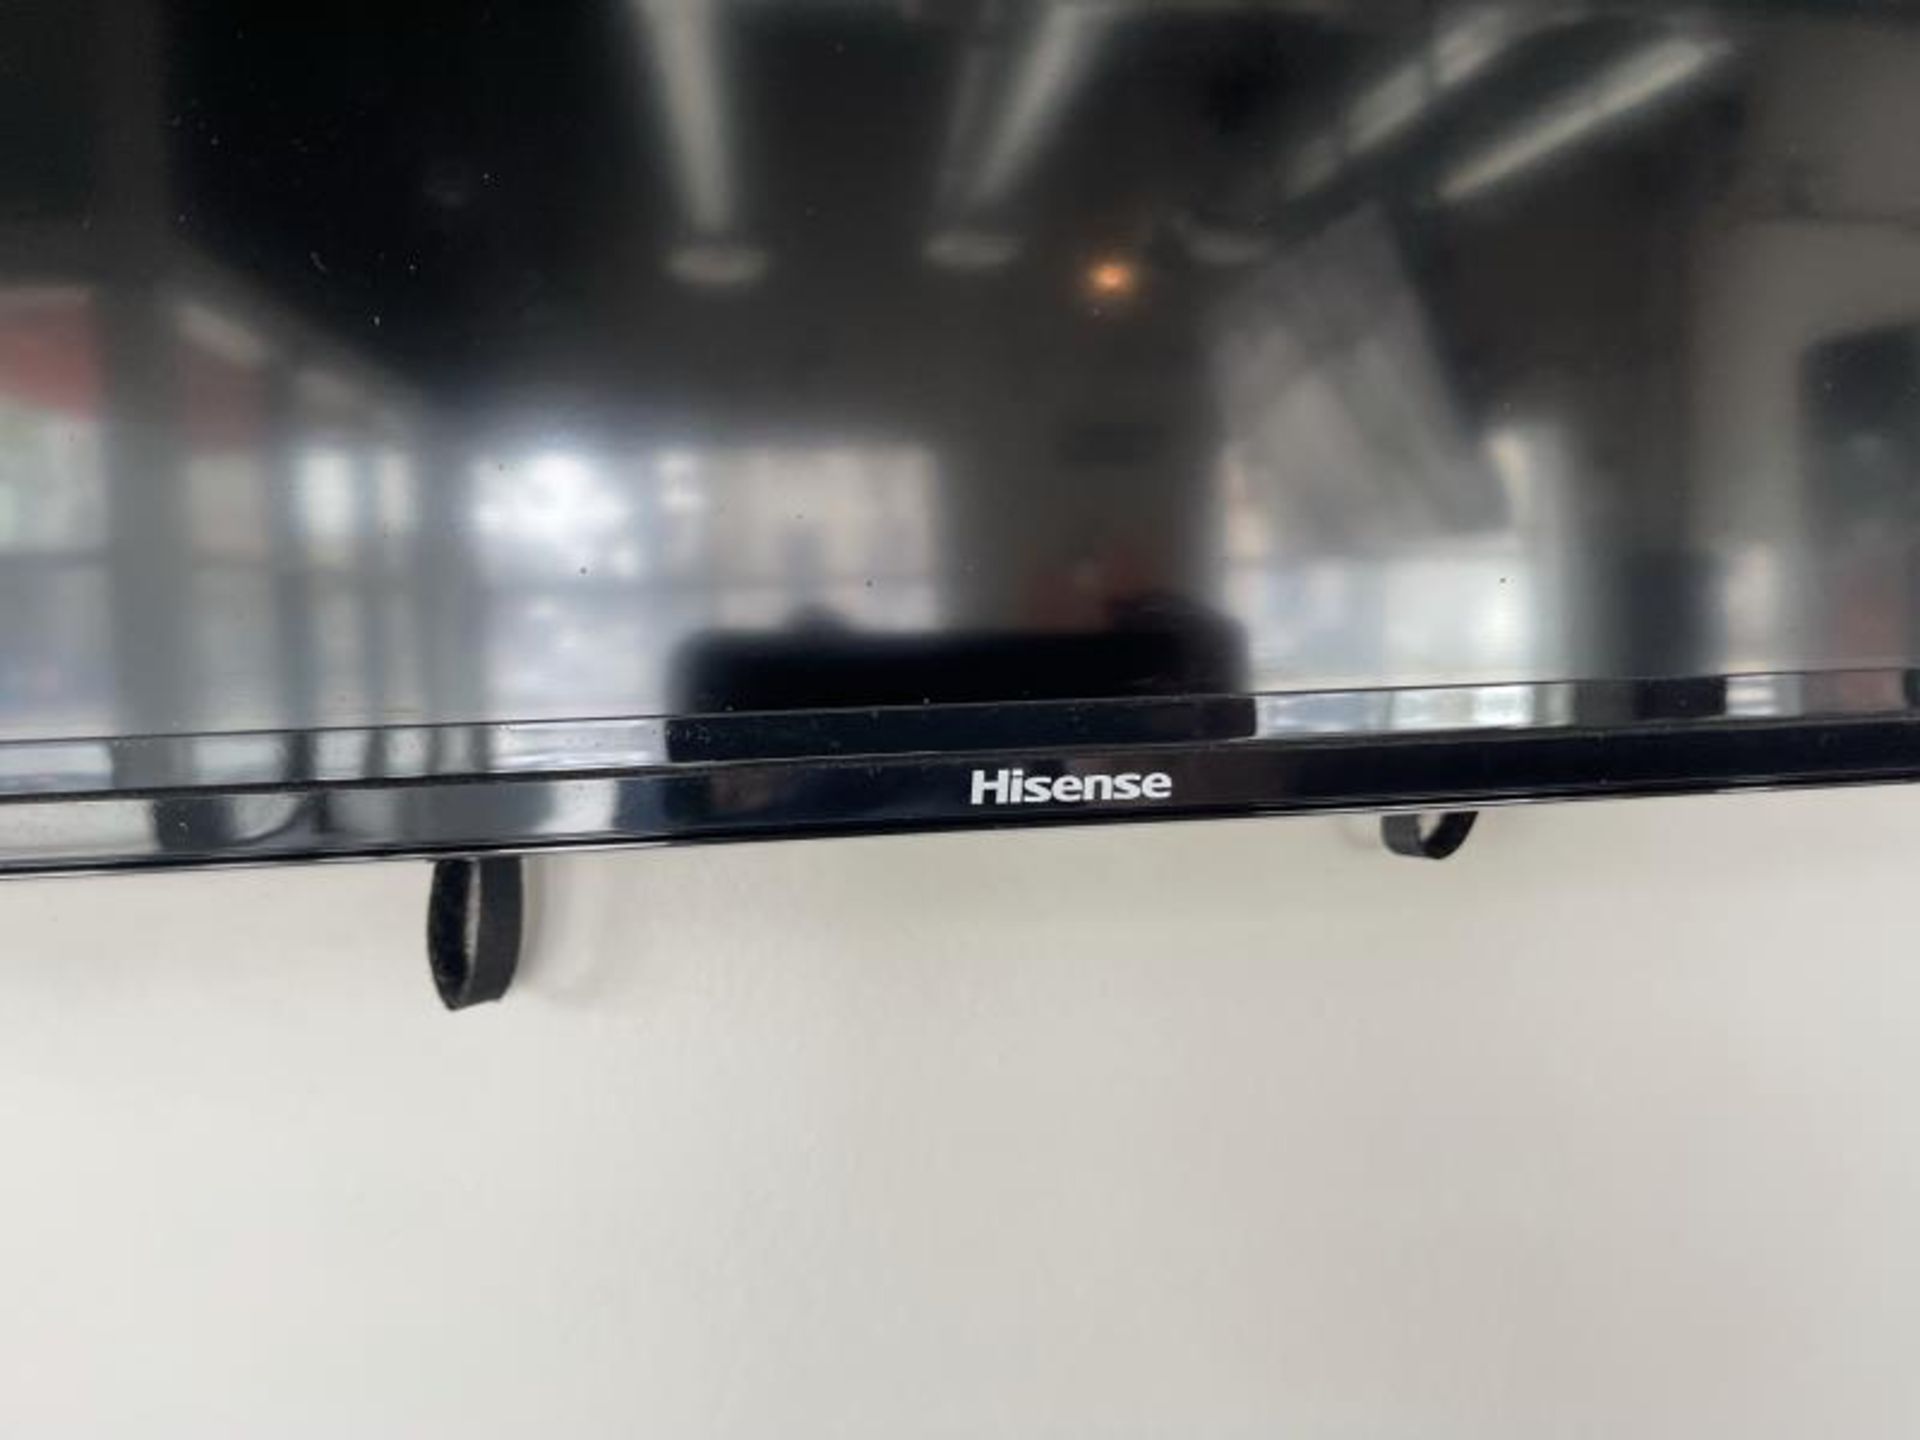 Lot of 4 Hisense Roku flat panel TV, 48" - Image 3 of 4